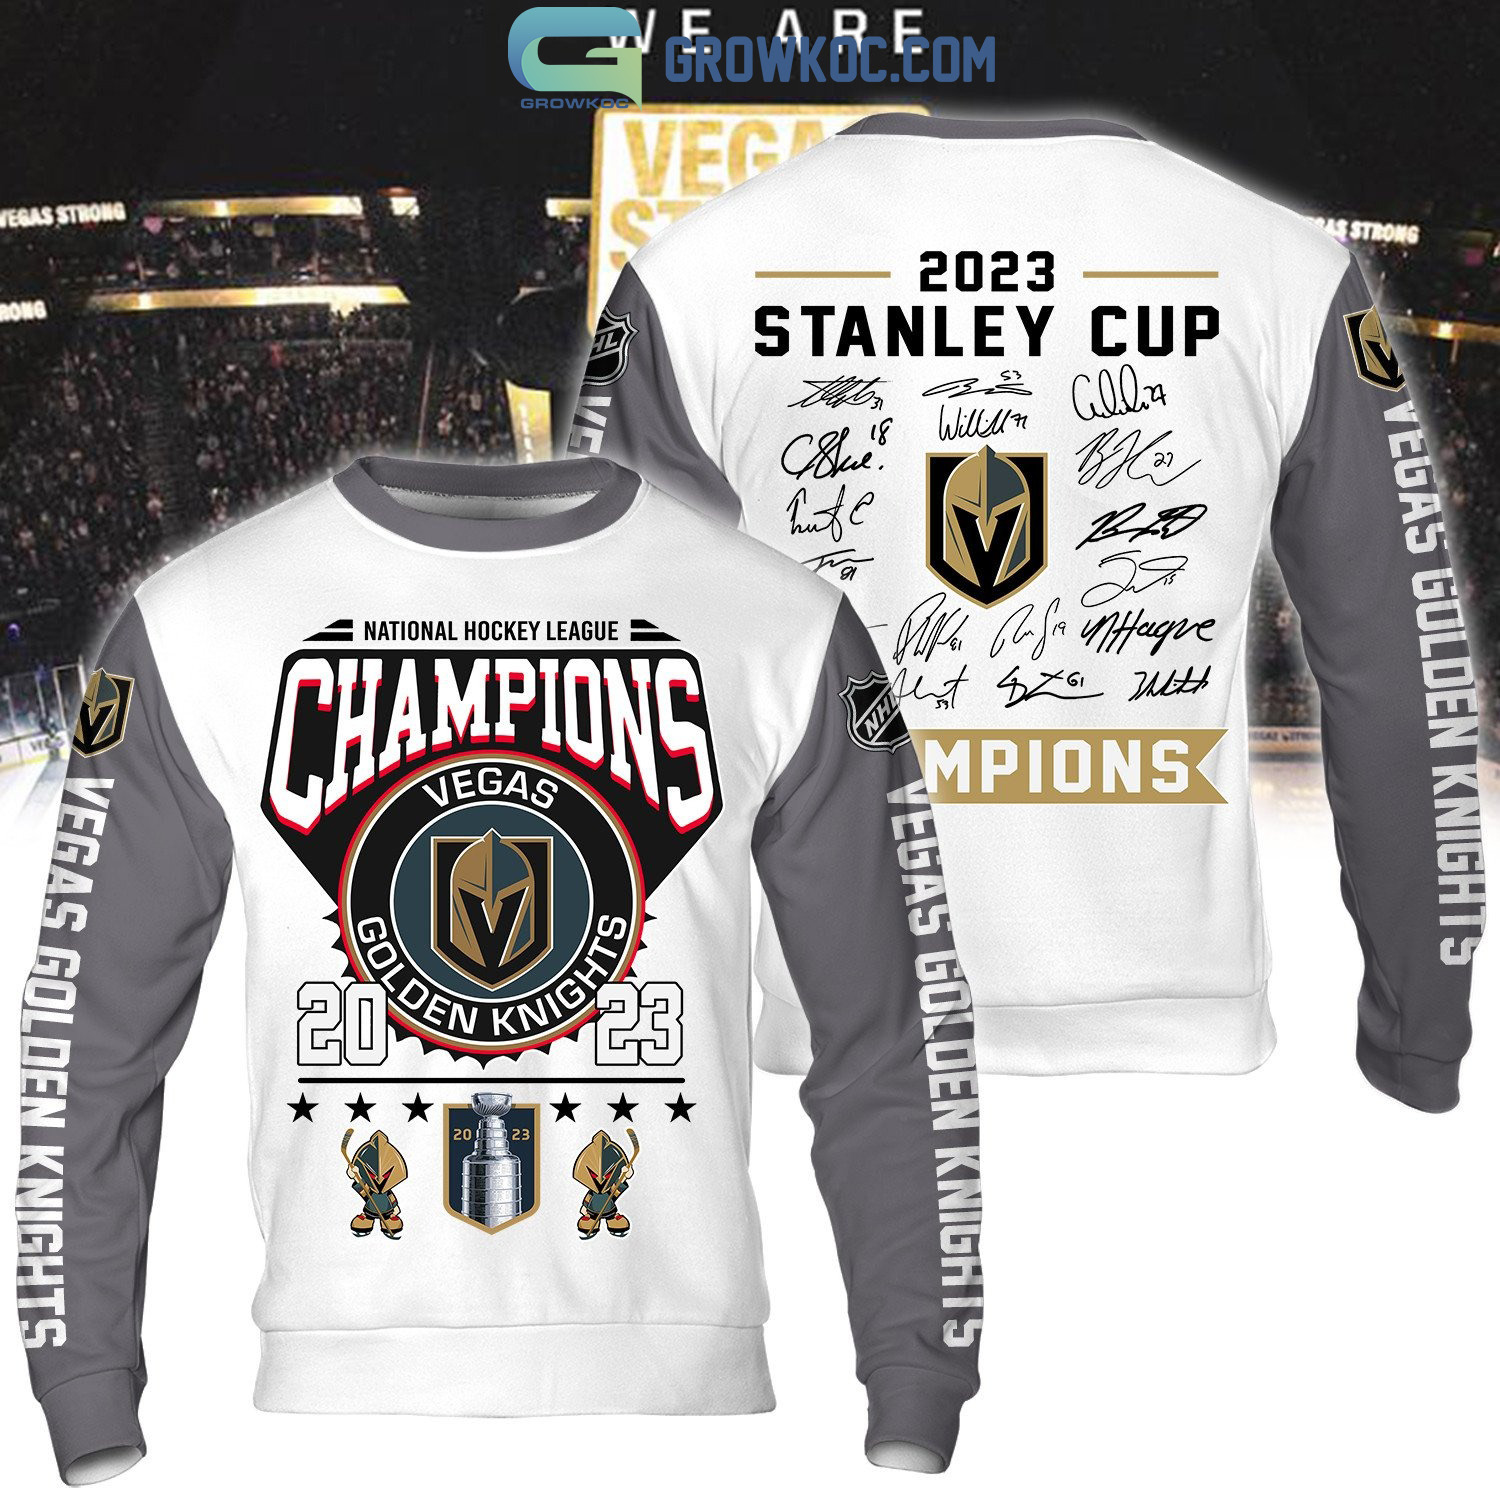 Vegas Golden Knights Love Grey Design Team Stanley Cup Champions Hoodie T  Shirt - Growkoc